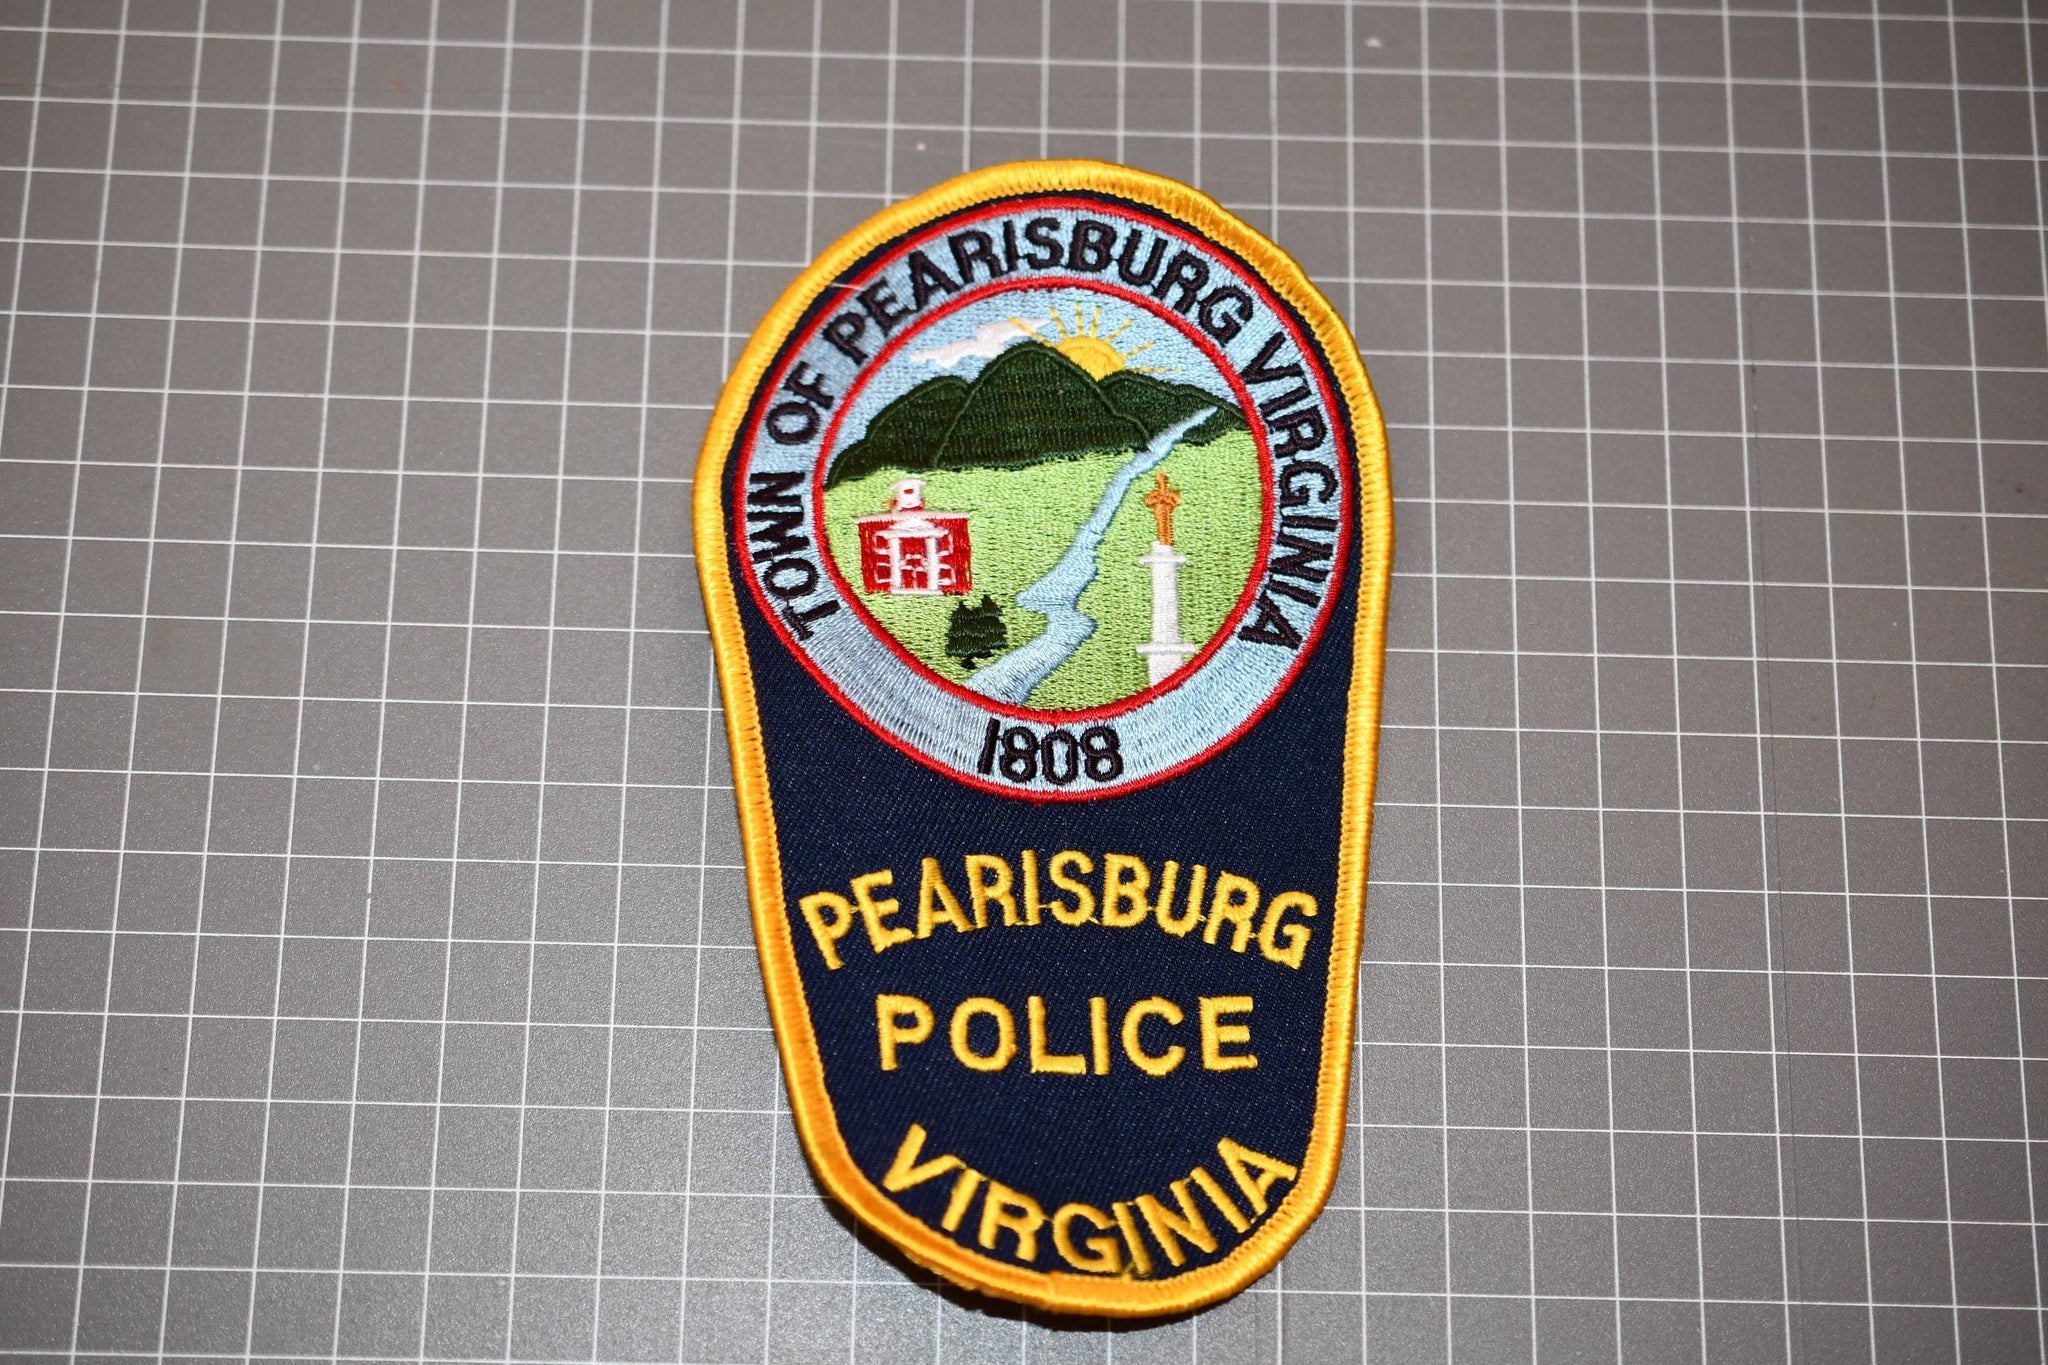 Pearisburg Virginia Police Patch (B20)